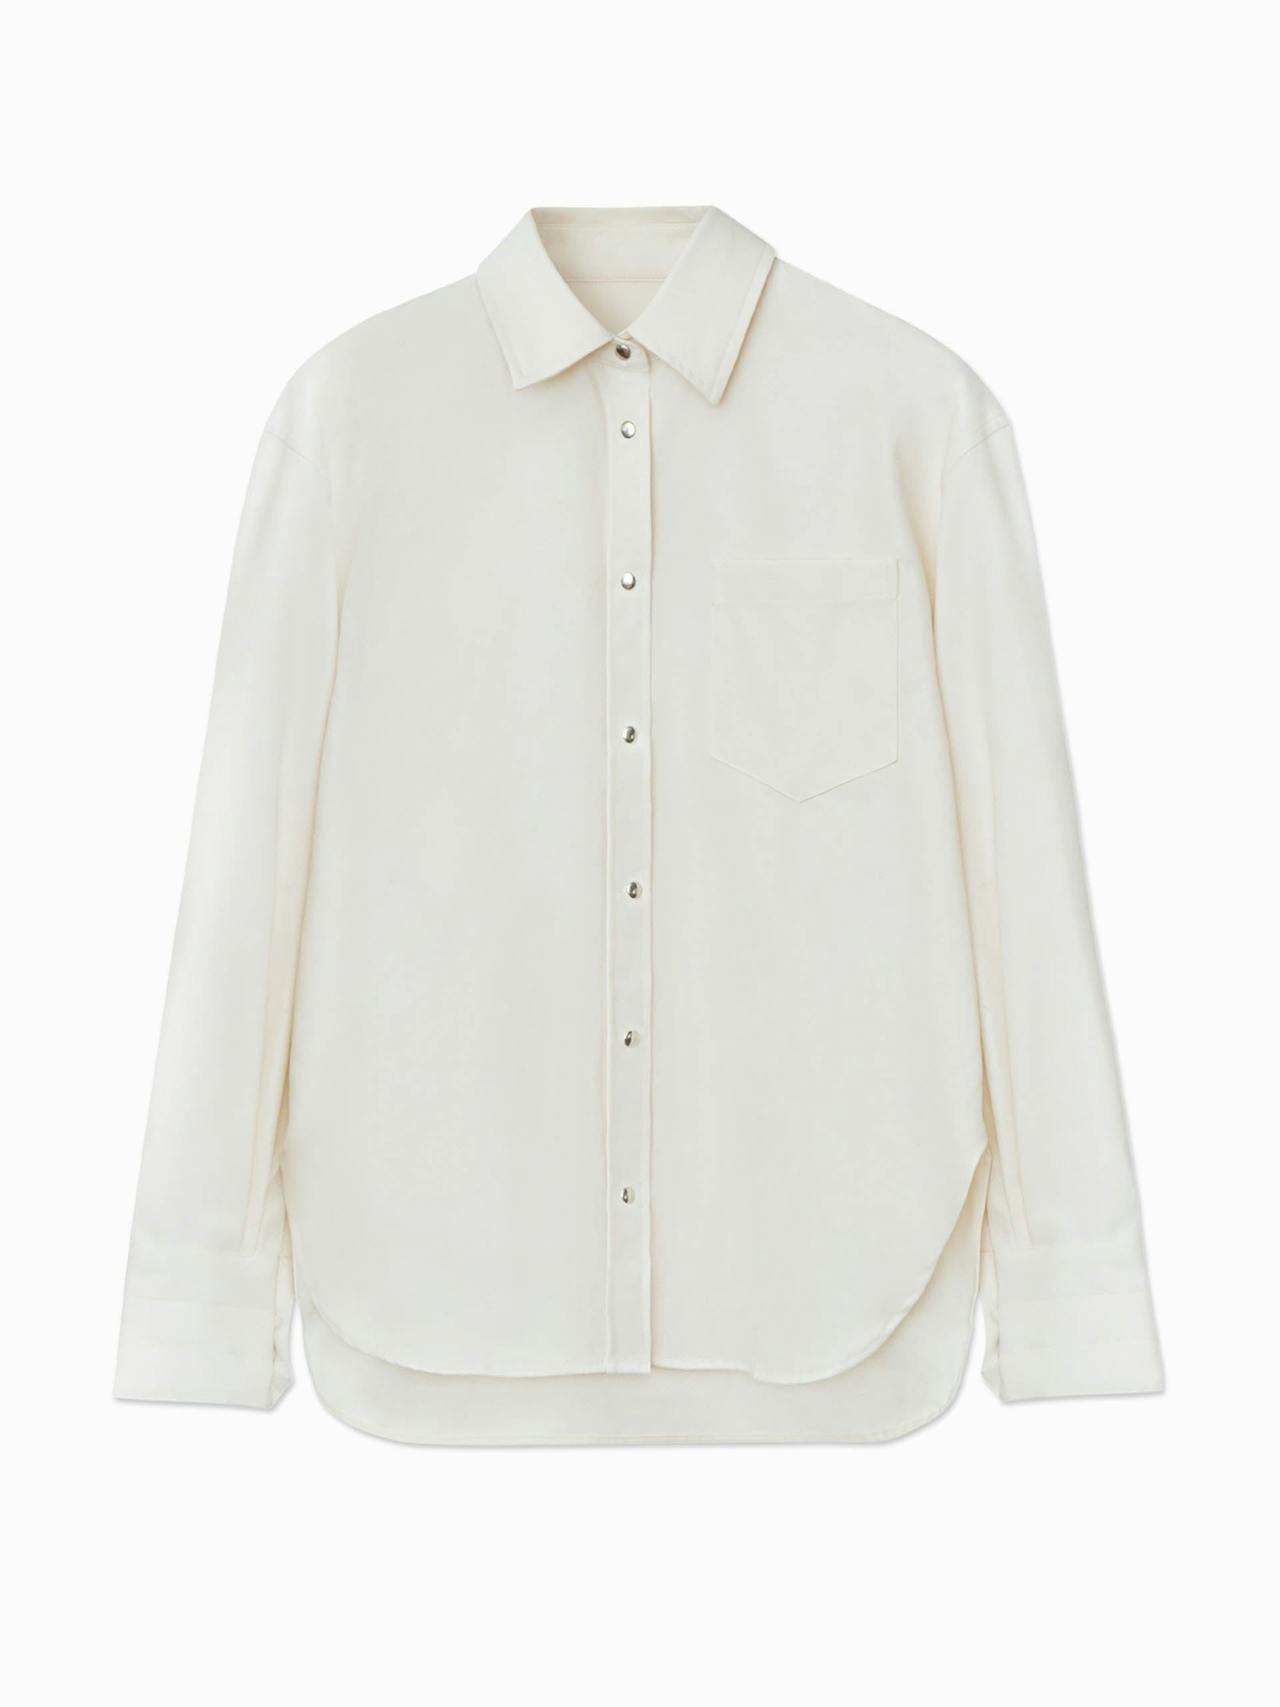 Ivory cotton snap shirt